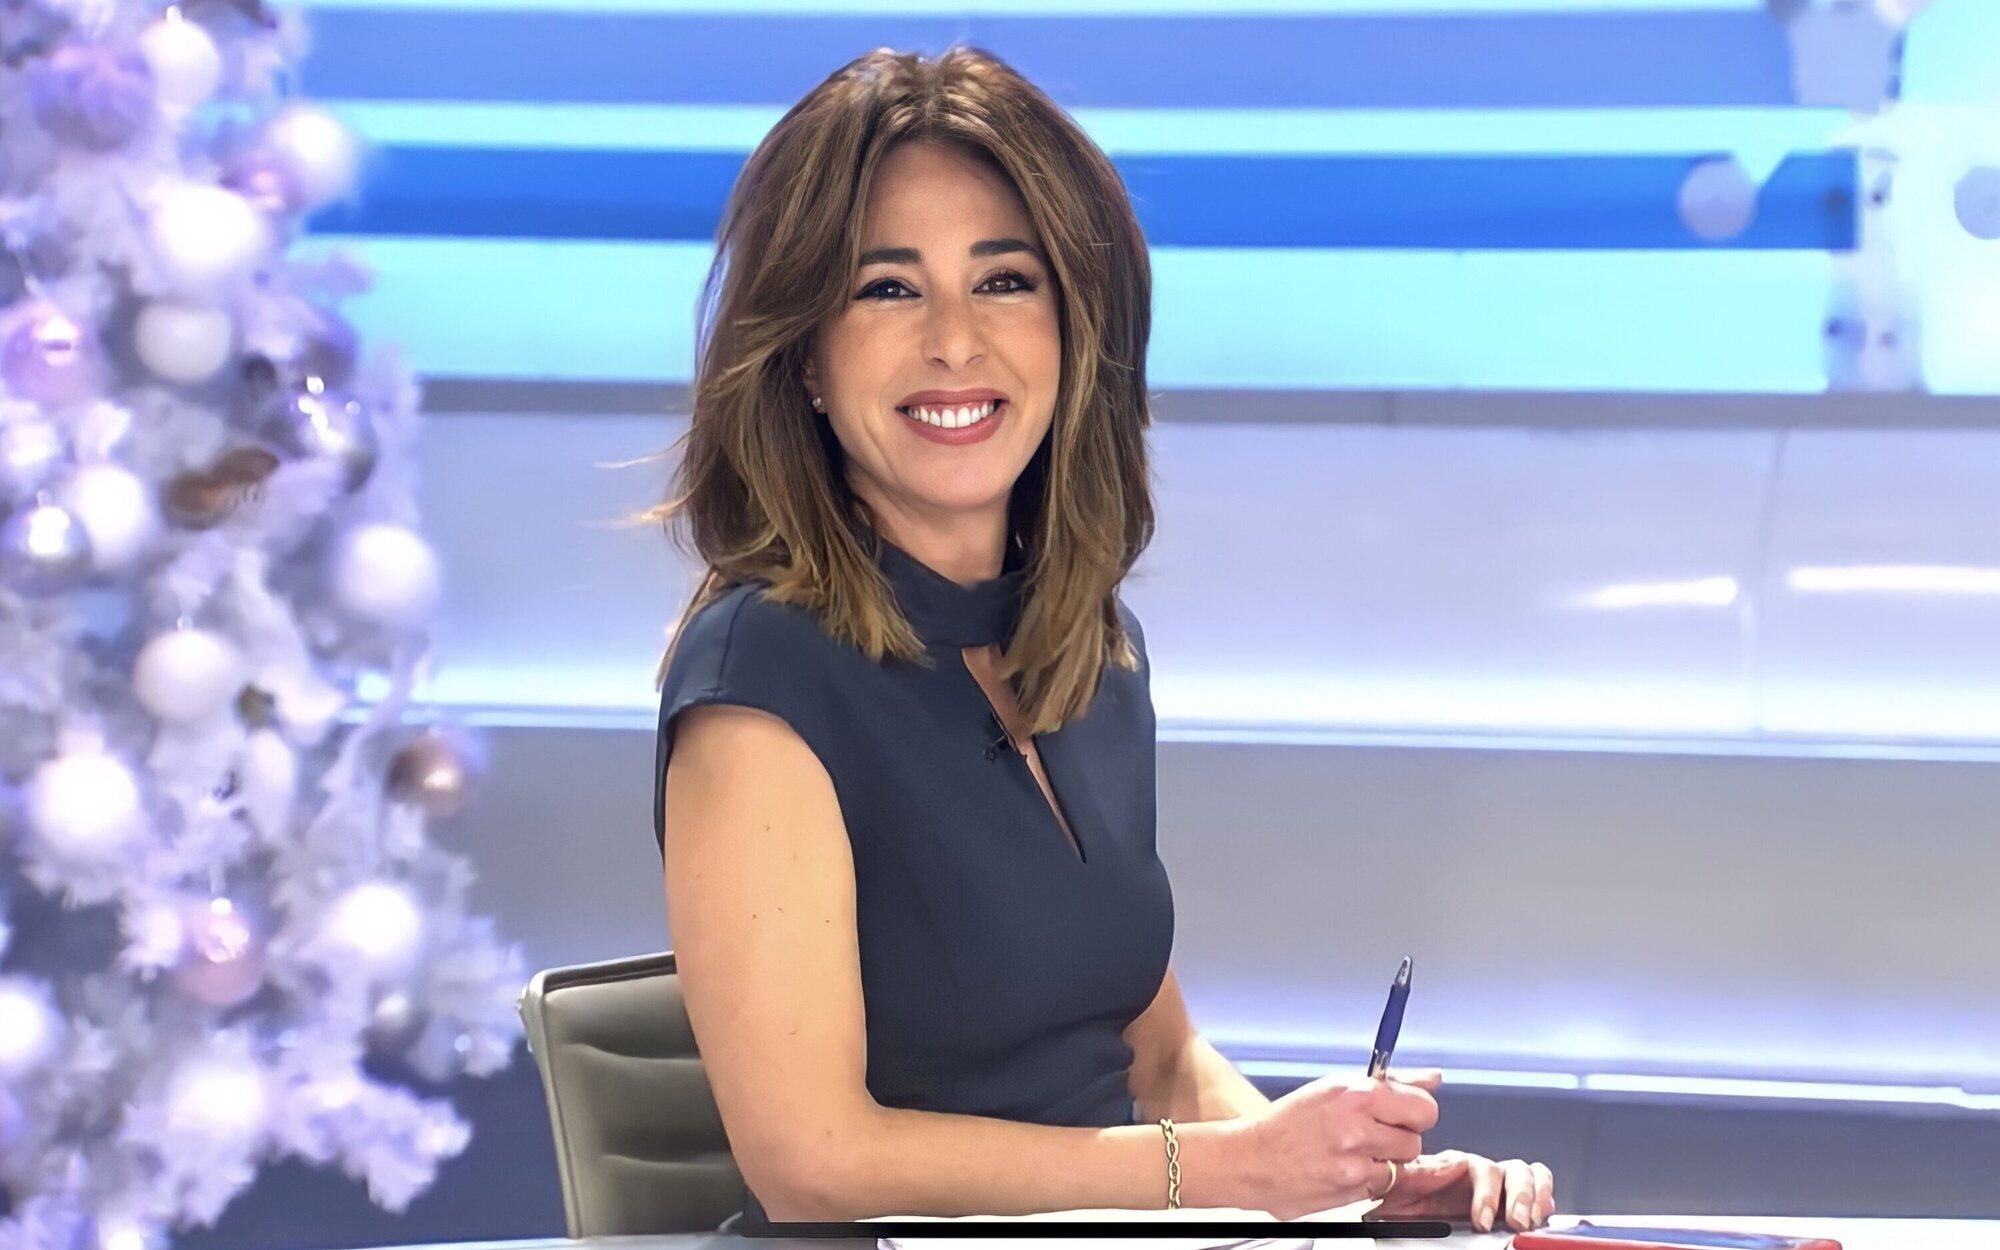 Ana Terradillos se suma al equipo fijo de presentadores de Mediaset con un contrato de larga duración